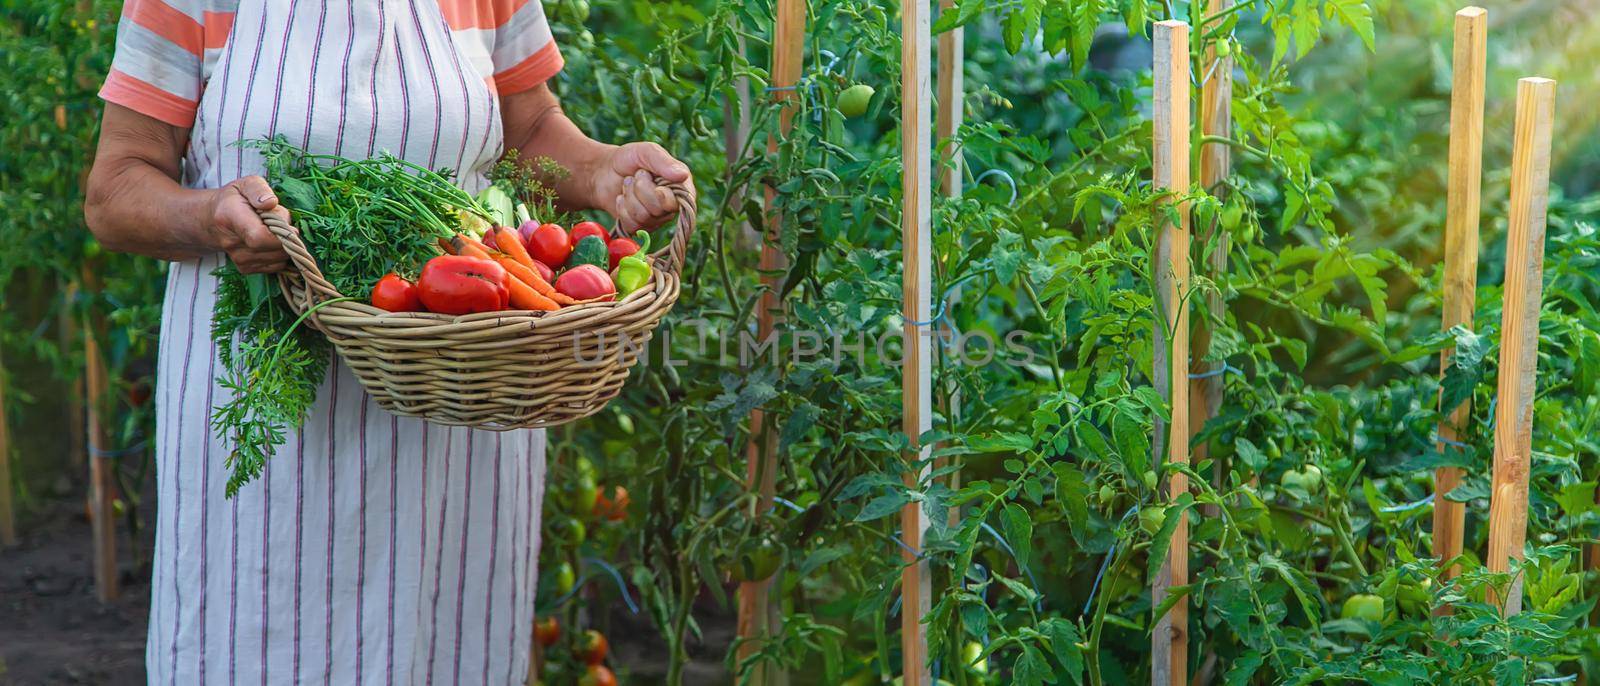 Senior woman harvesting vegetables in the garden. Selective focus. by yanadjana